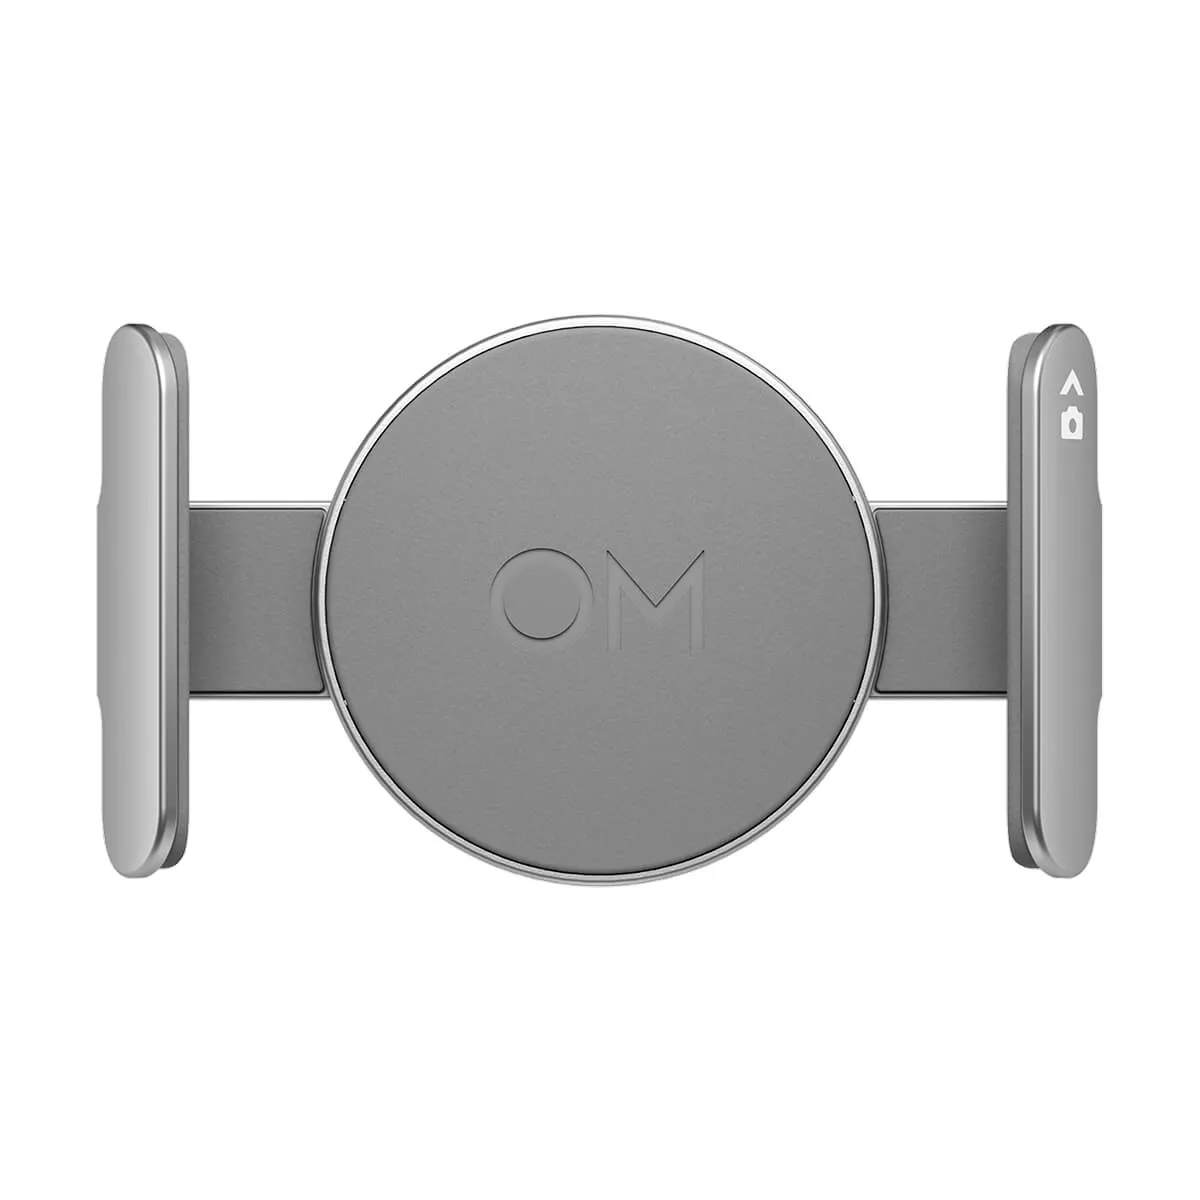 DJI Osmo Mobile 6 Smartphone Gimbal Stabilizer (Athens Gray) 64GB Accessory  Bundle 